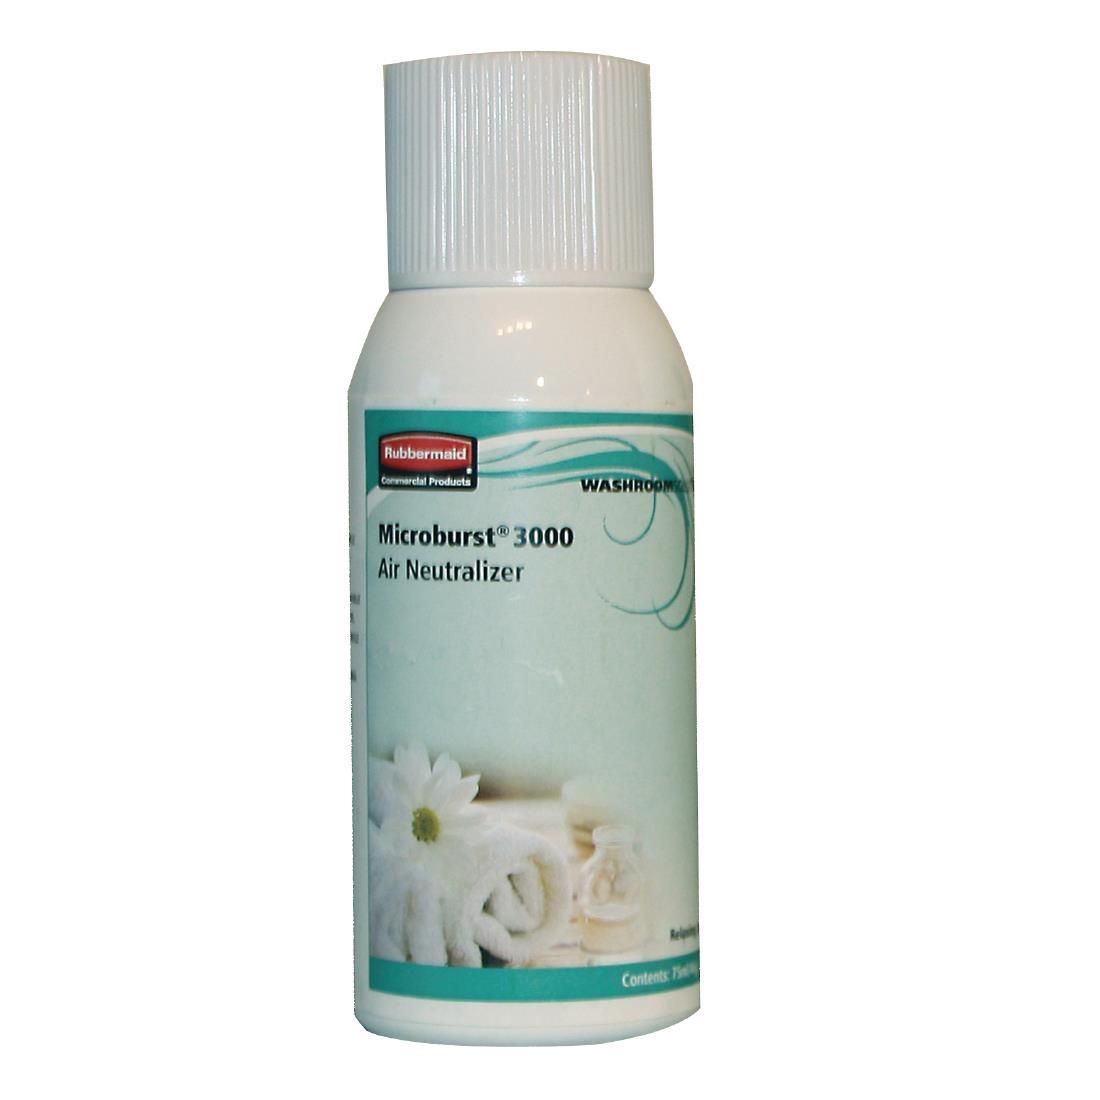 Rubbermaid Microburst 3000 Air Freshener Refills Purifying Spa 75ml (Pack of 12) - GH061  - 1